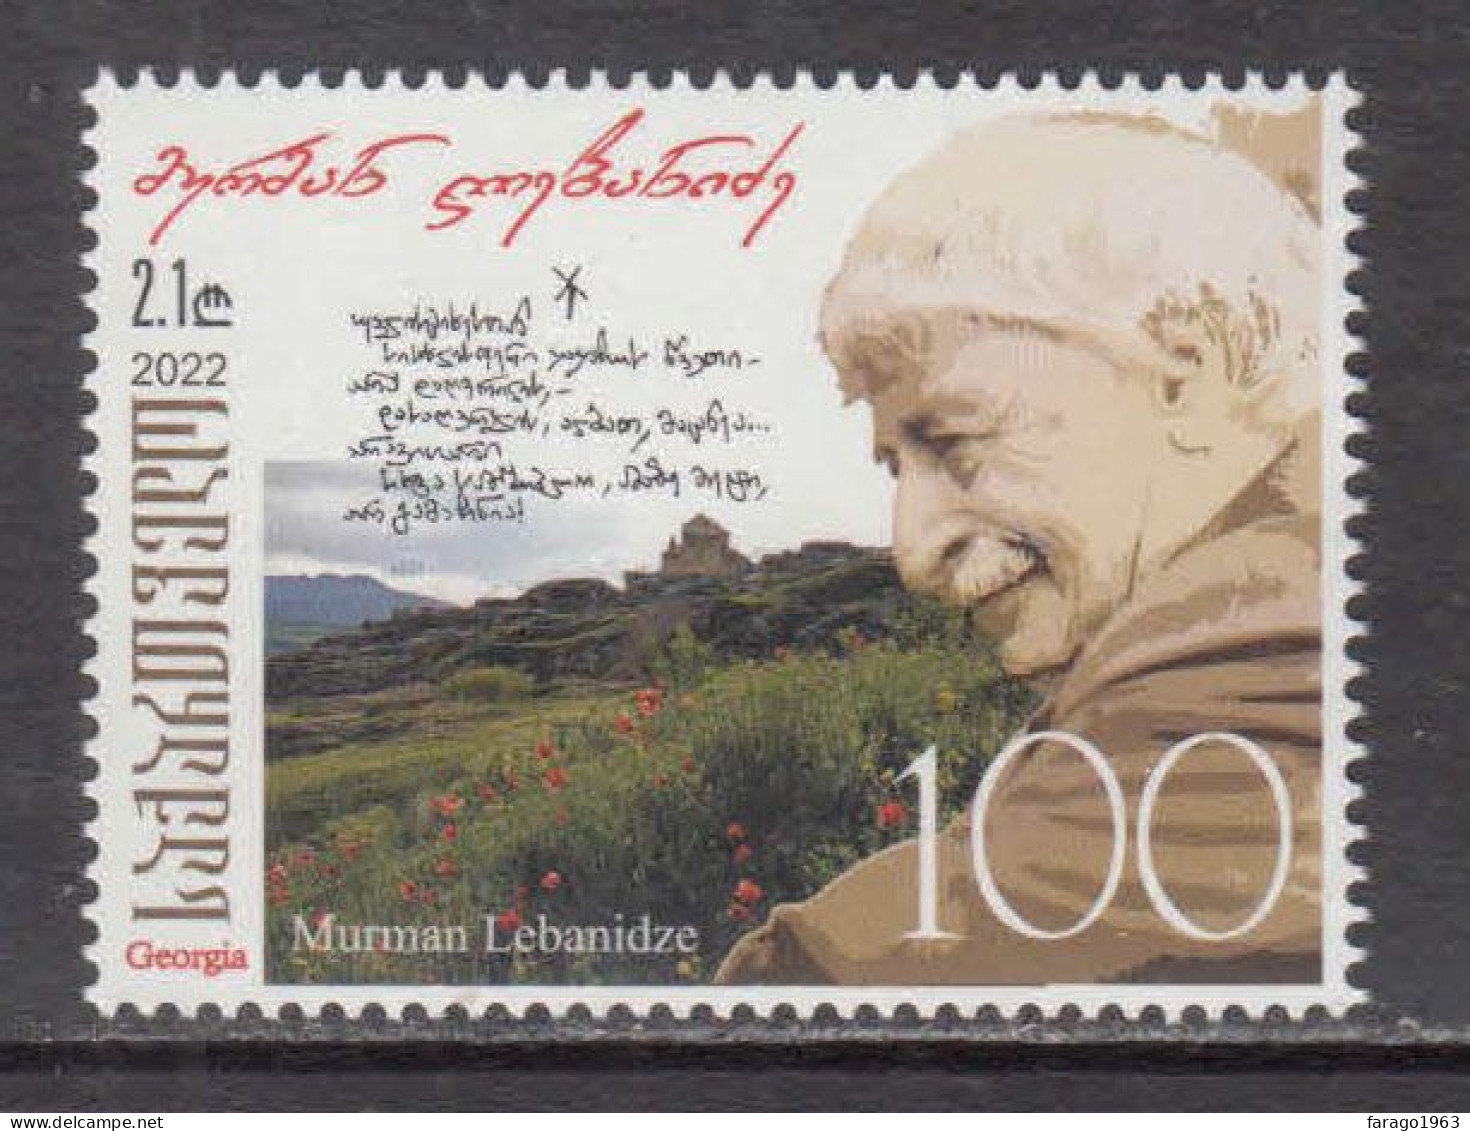 2022 Georgia 100th Anniversary Of The Birth Of Murman Lebanidze, 1922-2002 Complete Set Of 1 MNH - Georgië